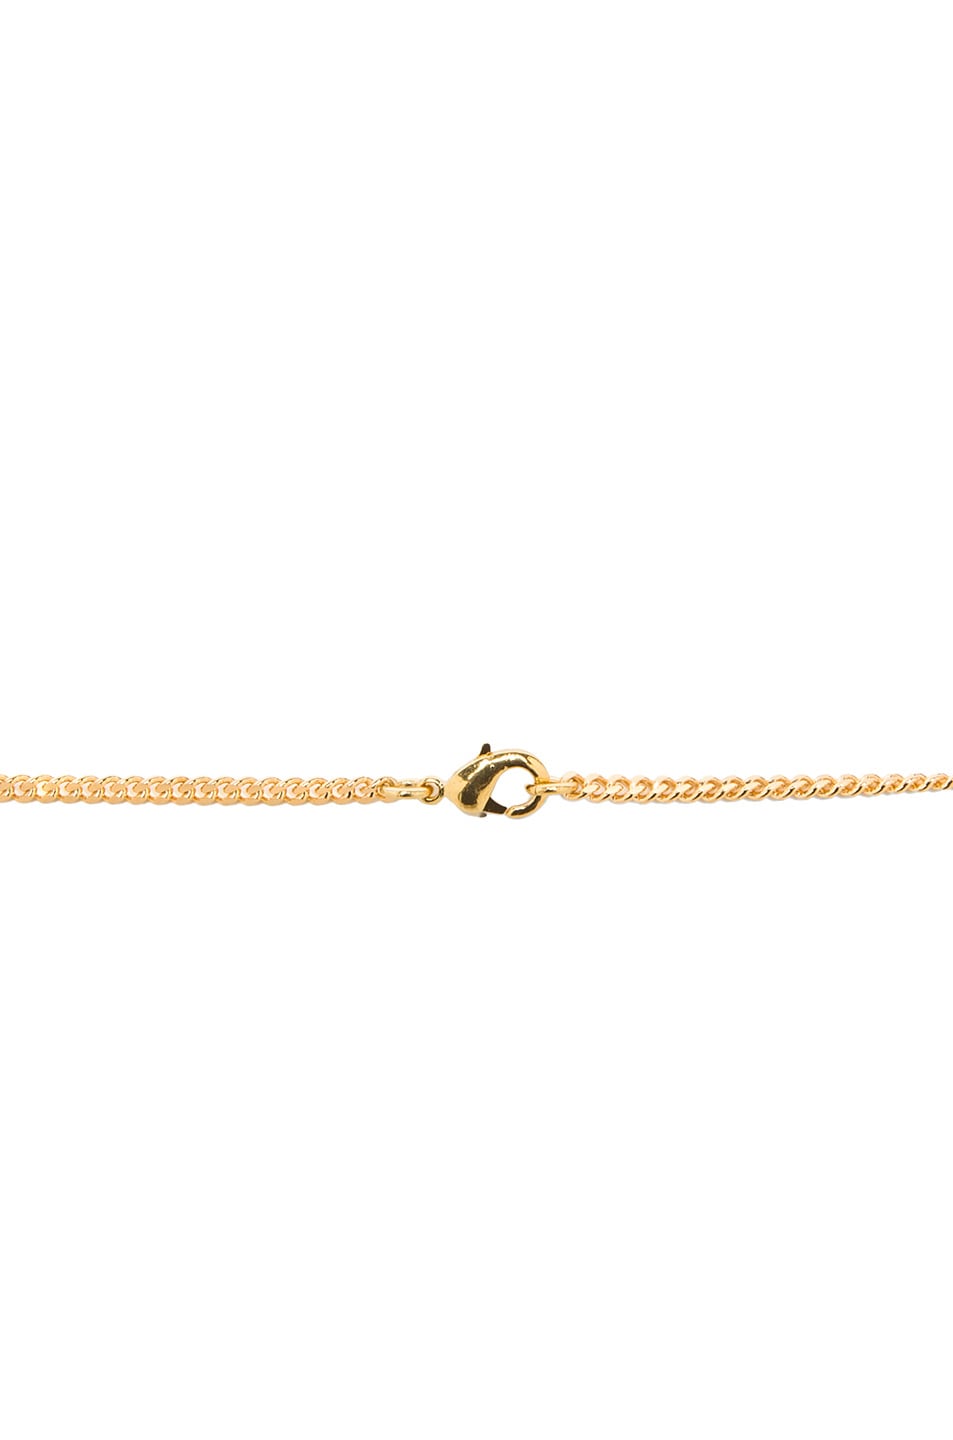 VERSACE Medusa Tassel Necklace in Black & Gold | FWRD